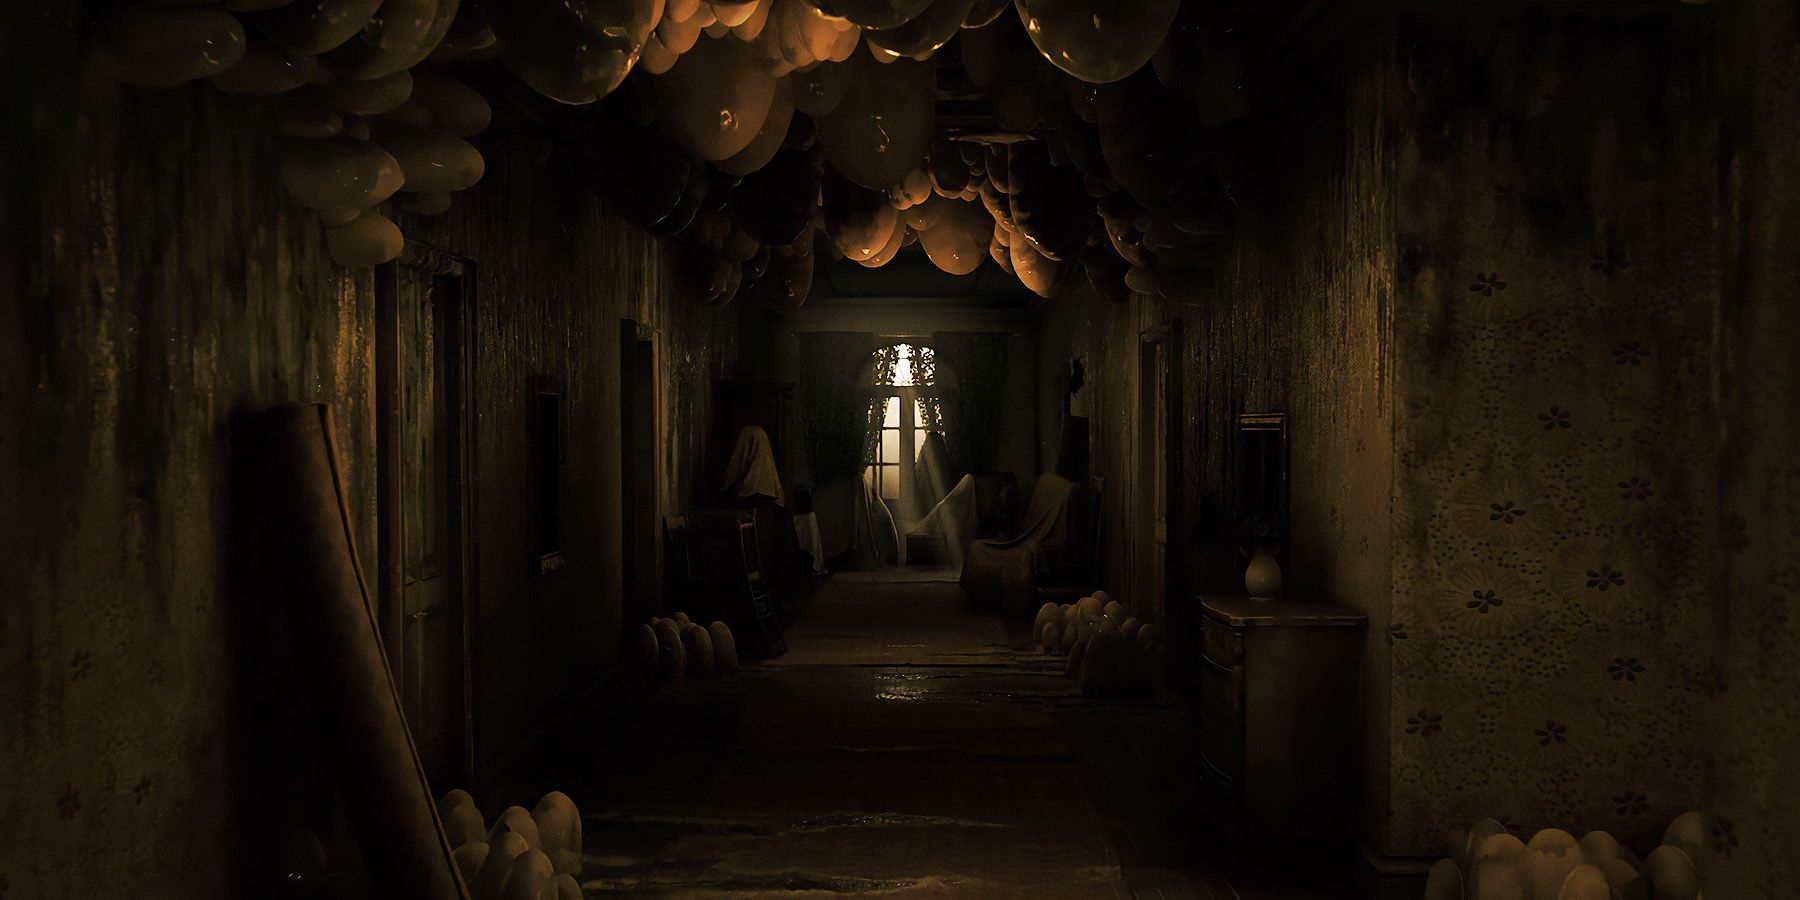 alone-in-the-dark-cinematic-still-game-rant-advance-setting-interior-hallway-overgrown-eggs-1